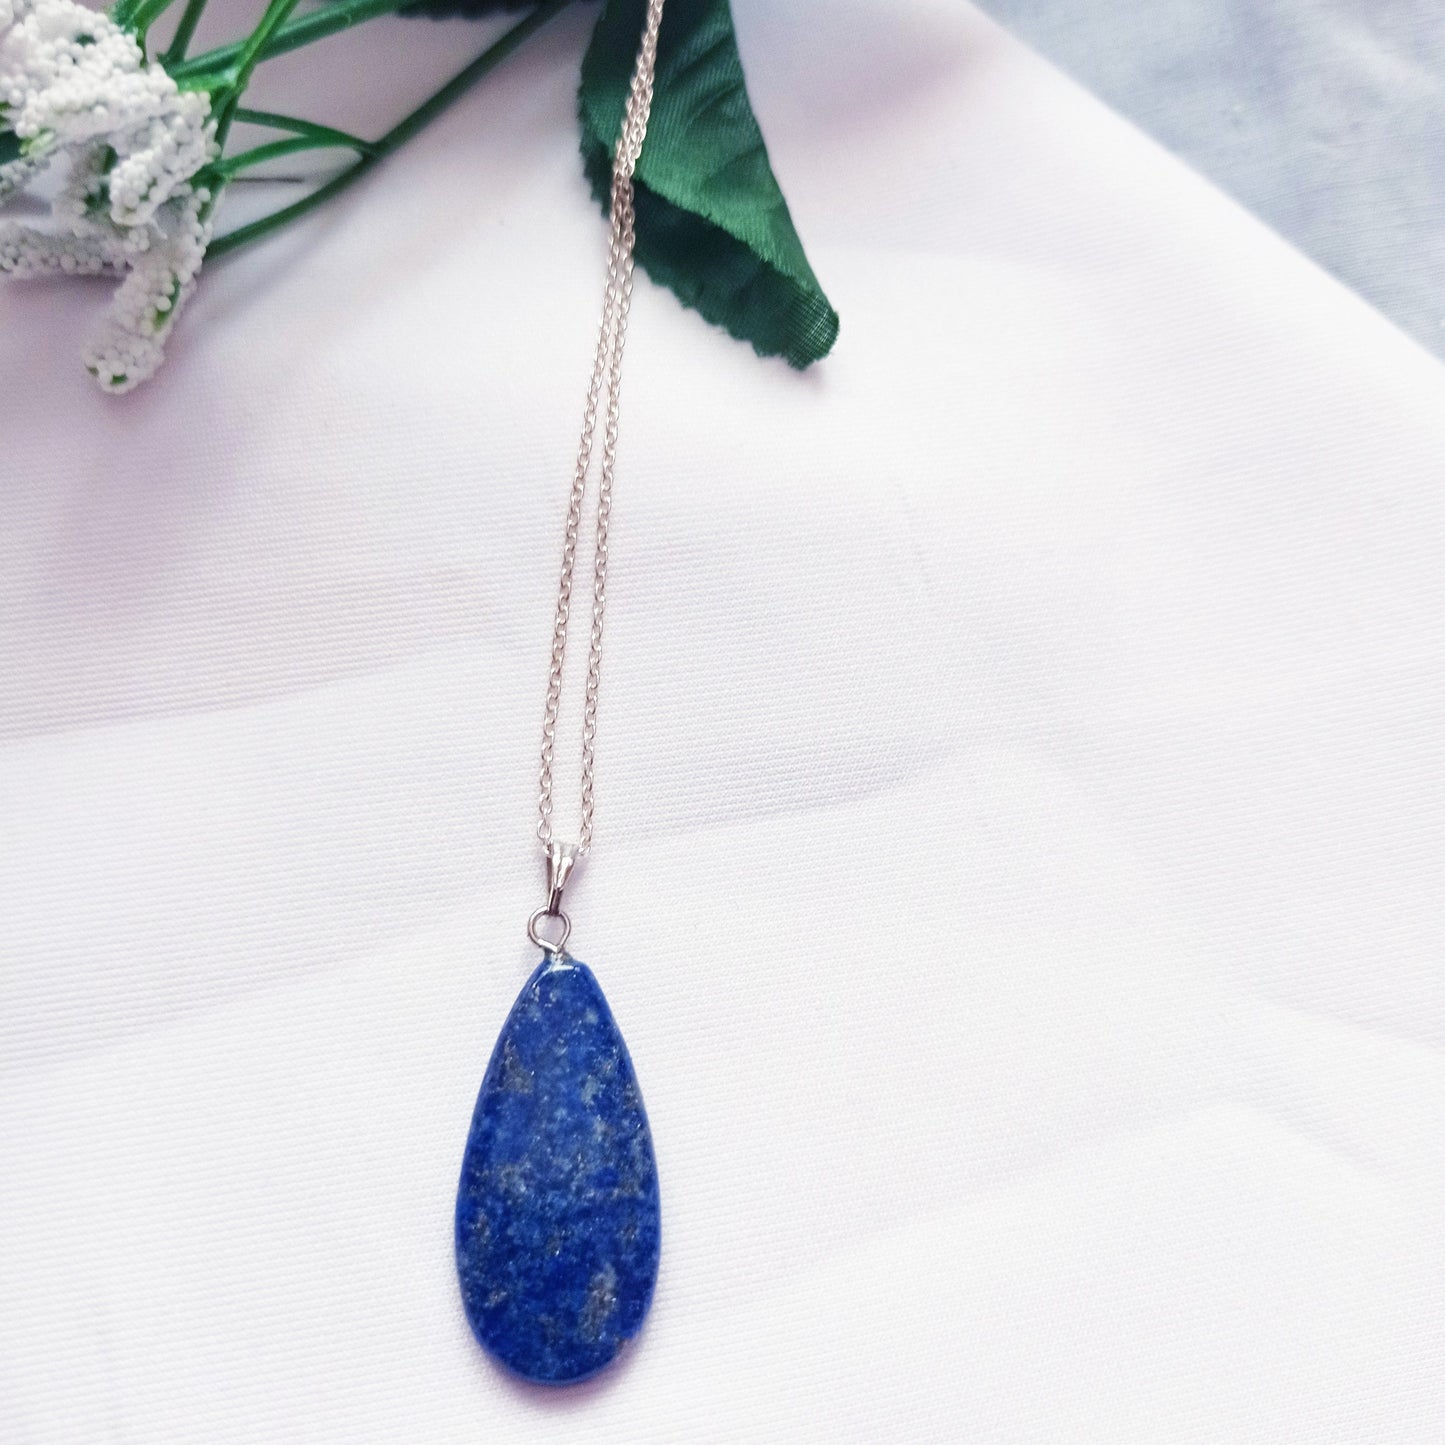 Lapis Lazuli Necklace, Lapis Lazuli Sterling Silver necklace, Lapis Lazuli Teardrop Pendant Necklace | by nlanlaVictory-2